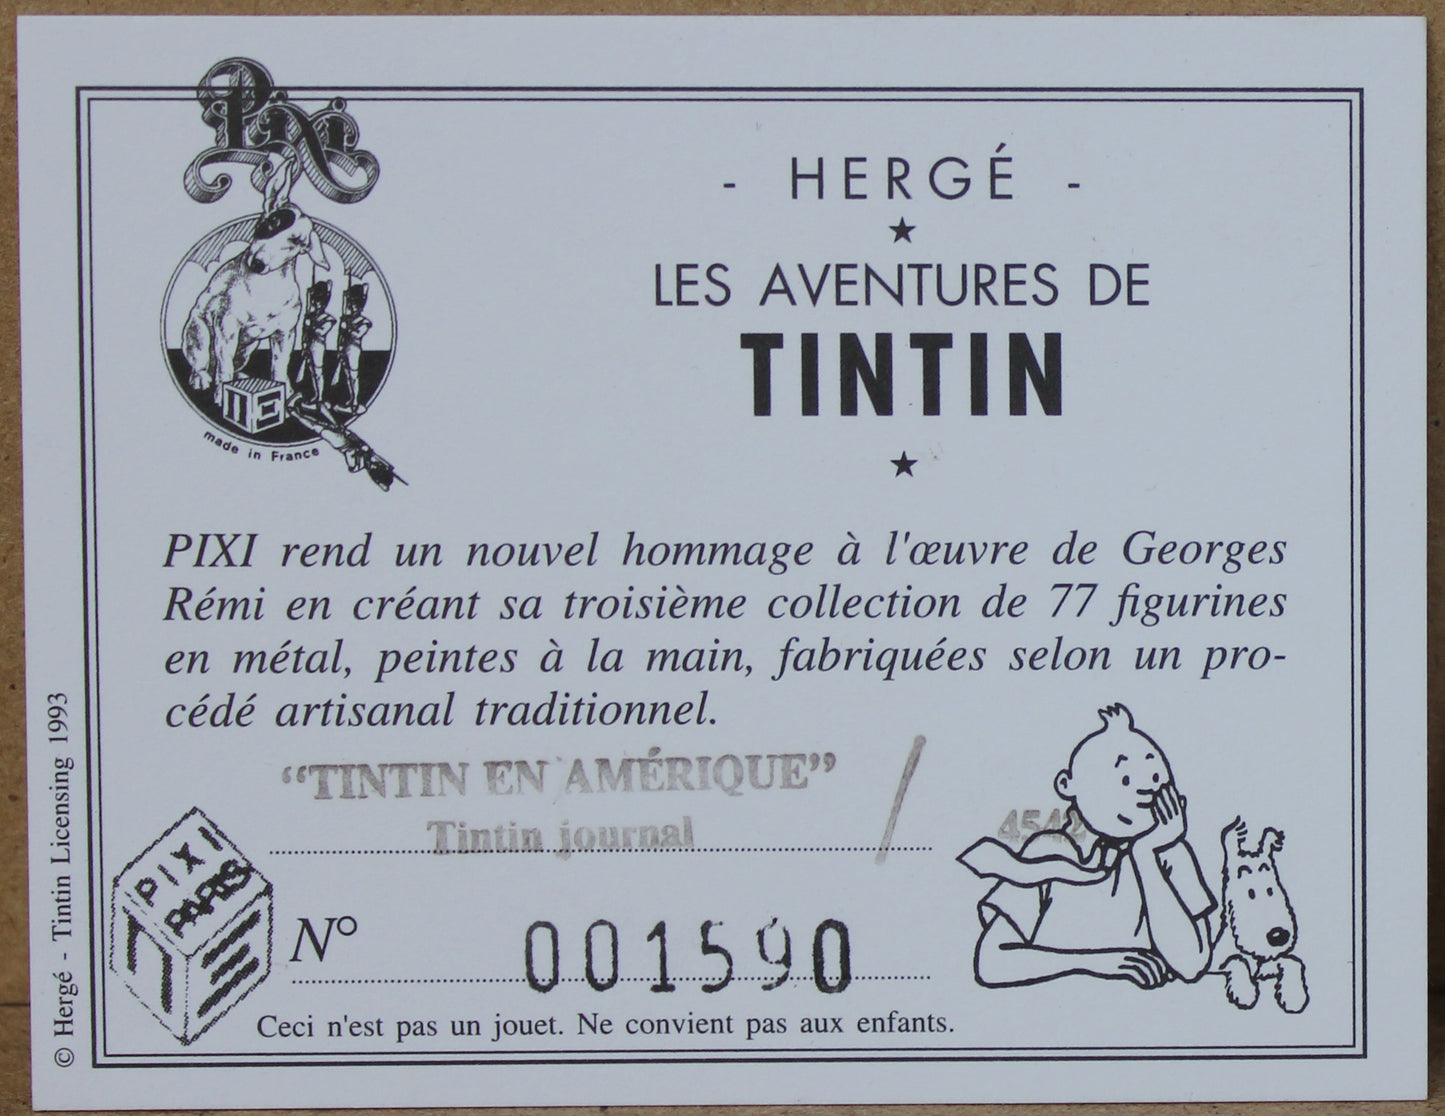 Tintin en Amerique, Tintin Journal